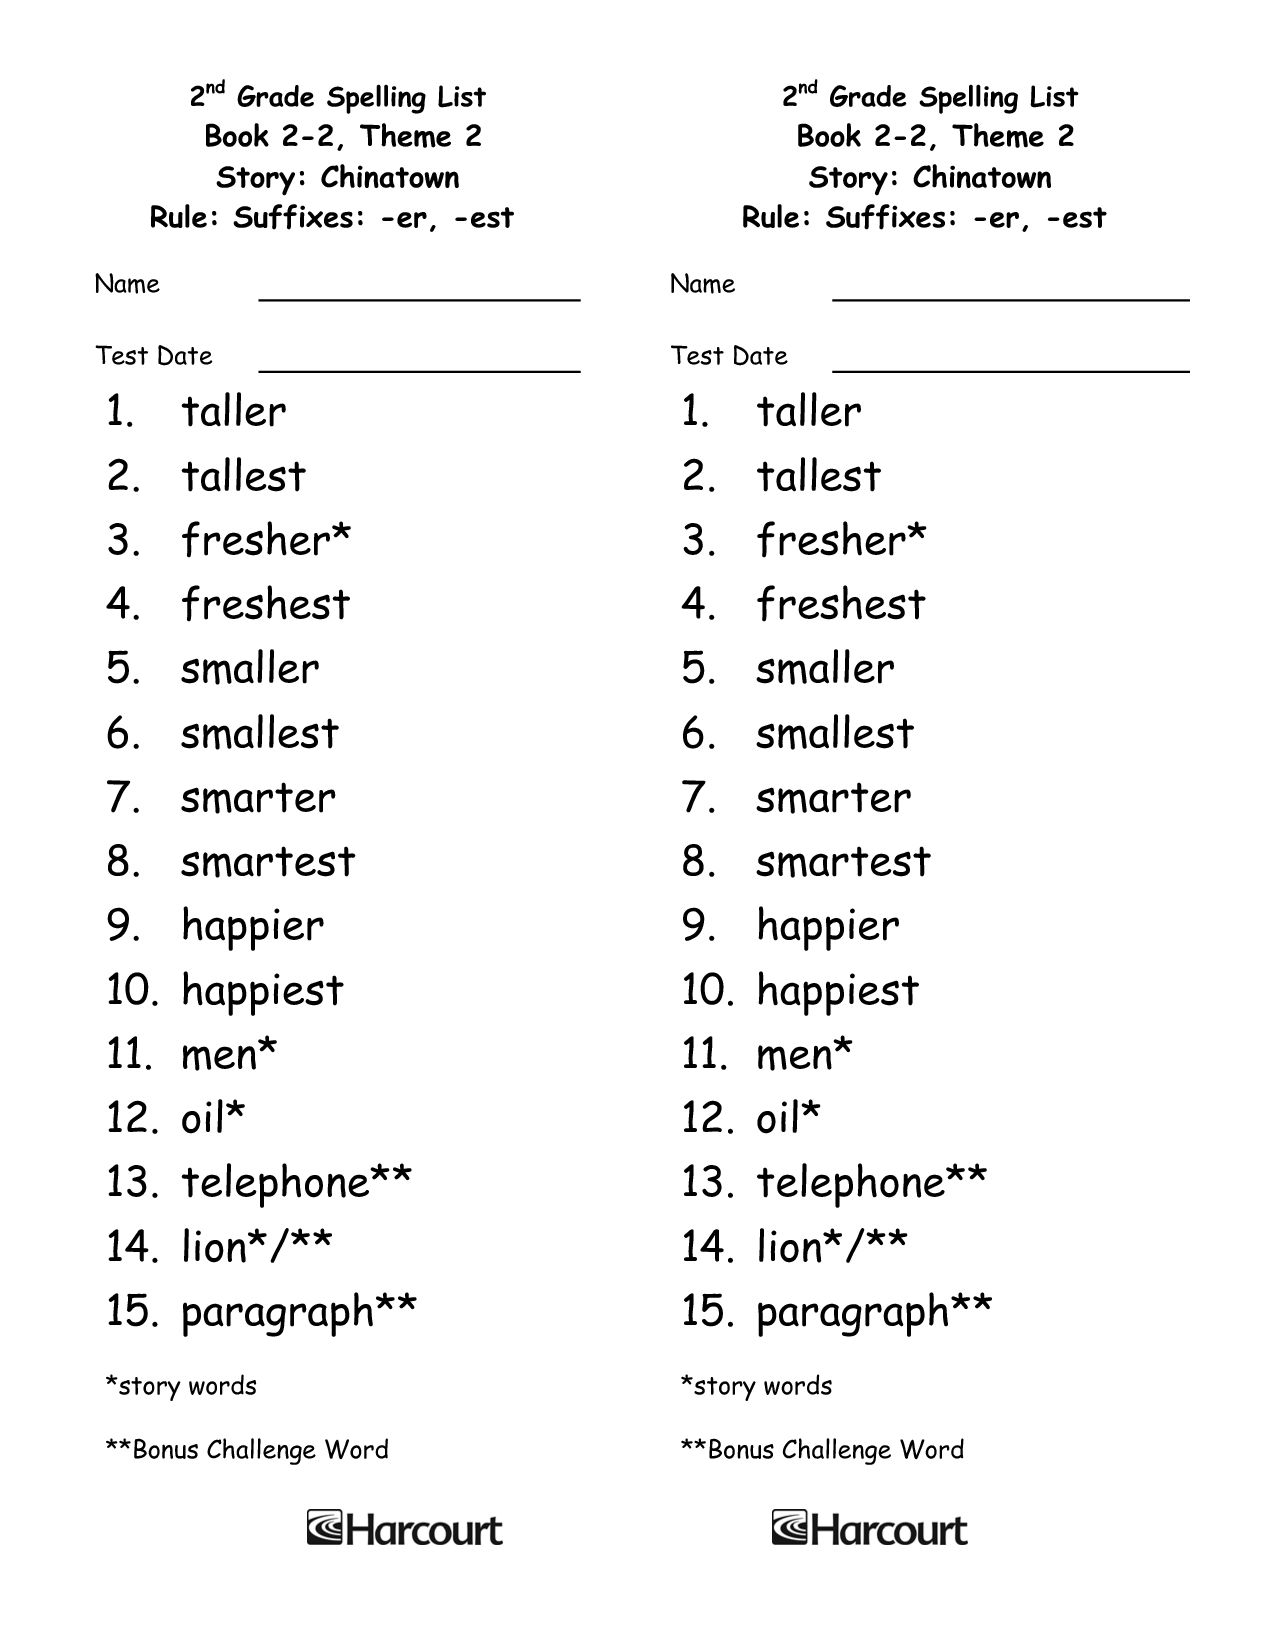 1st Grade Spelling Words Worksheet